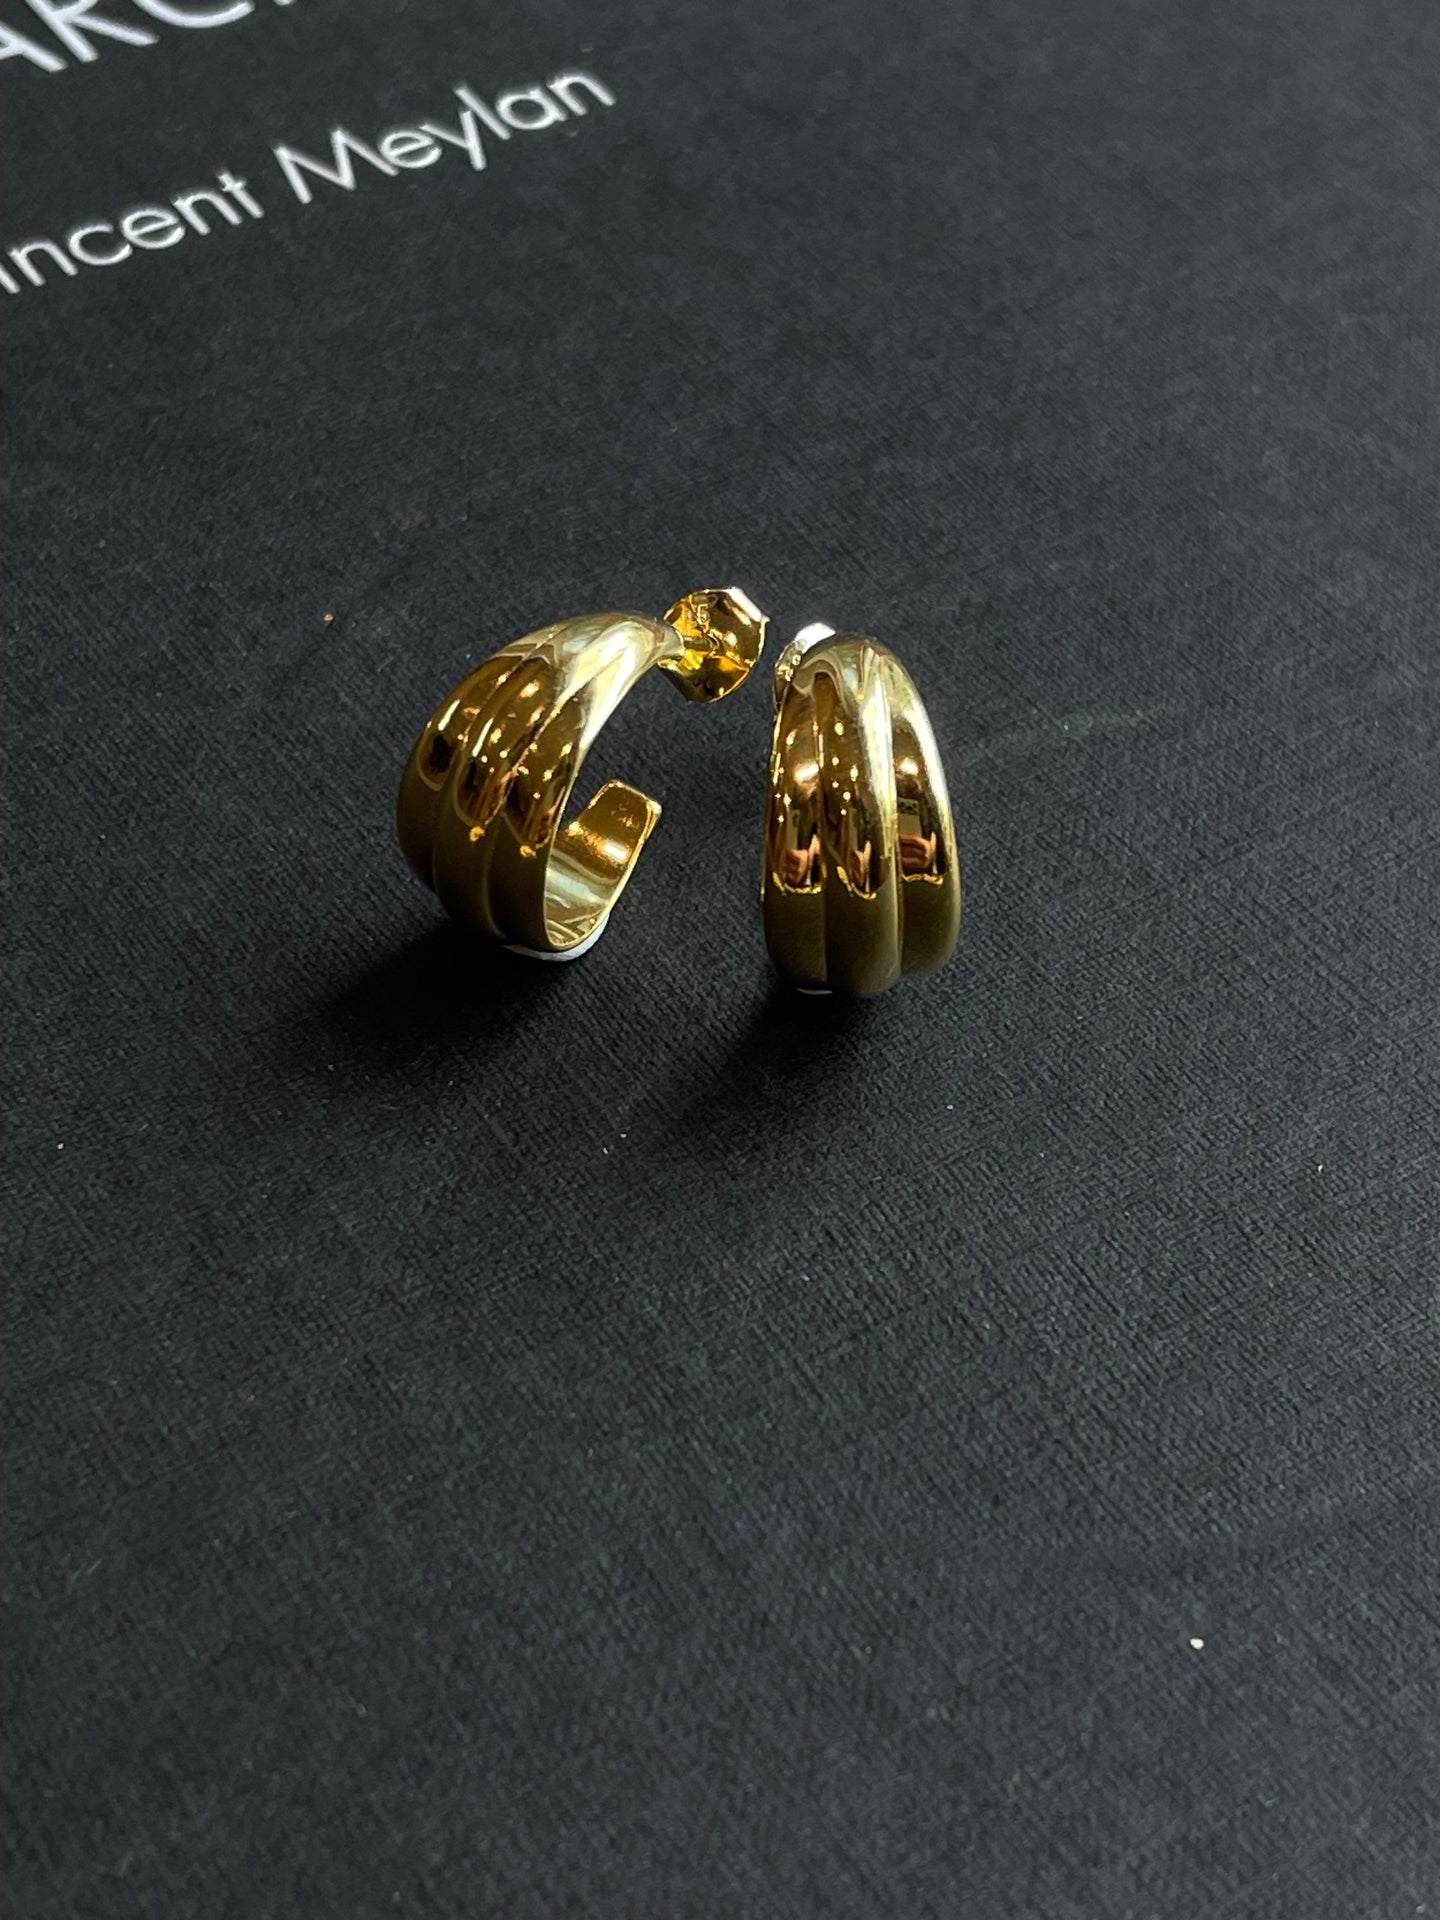 GG Chic 16mm Hoop Earrings in 14k Gold-Plated Sterling Silver